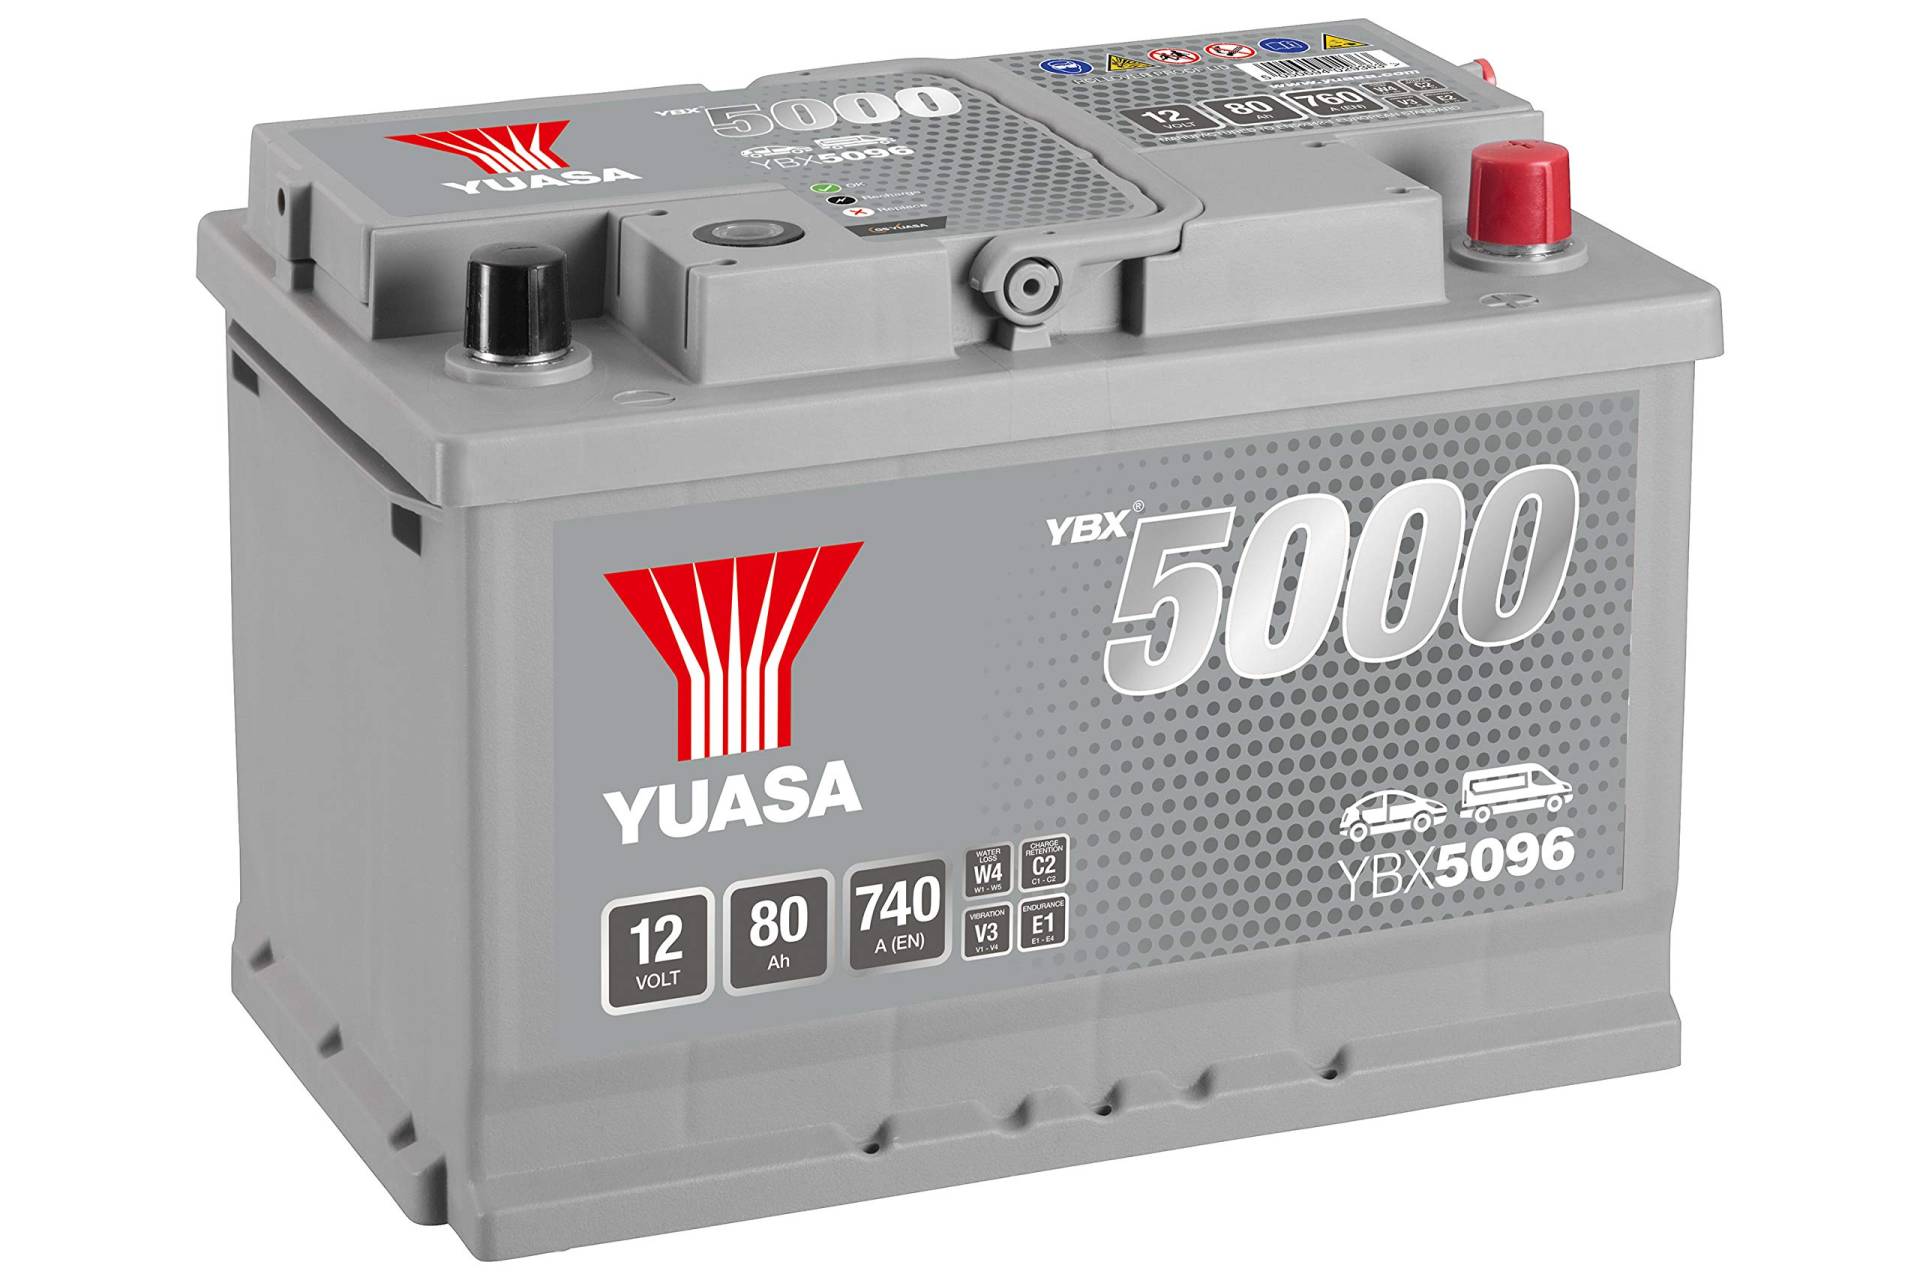 Yuasa YBX5096 12V 80Ah 740A Silber Hochleistungsbatterie von Yuasa